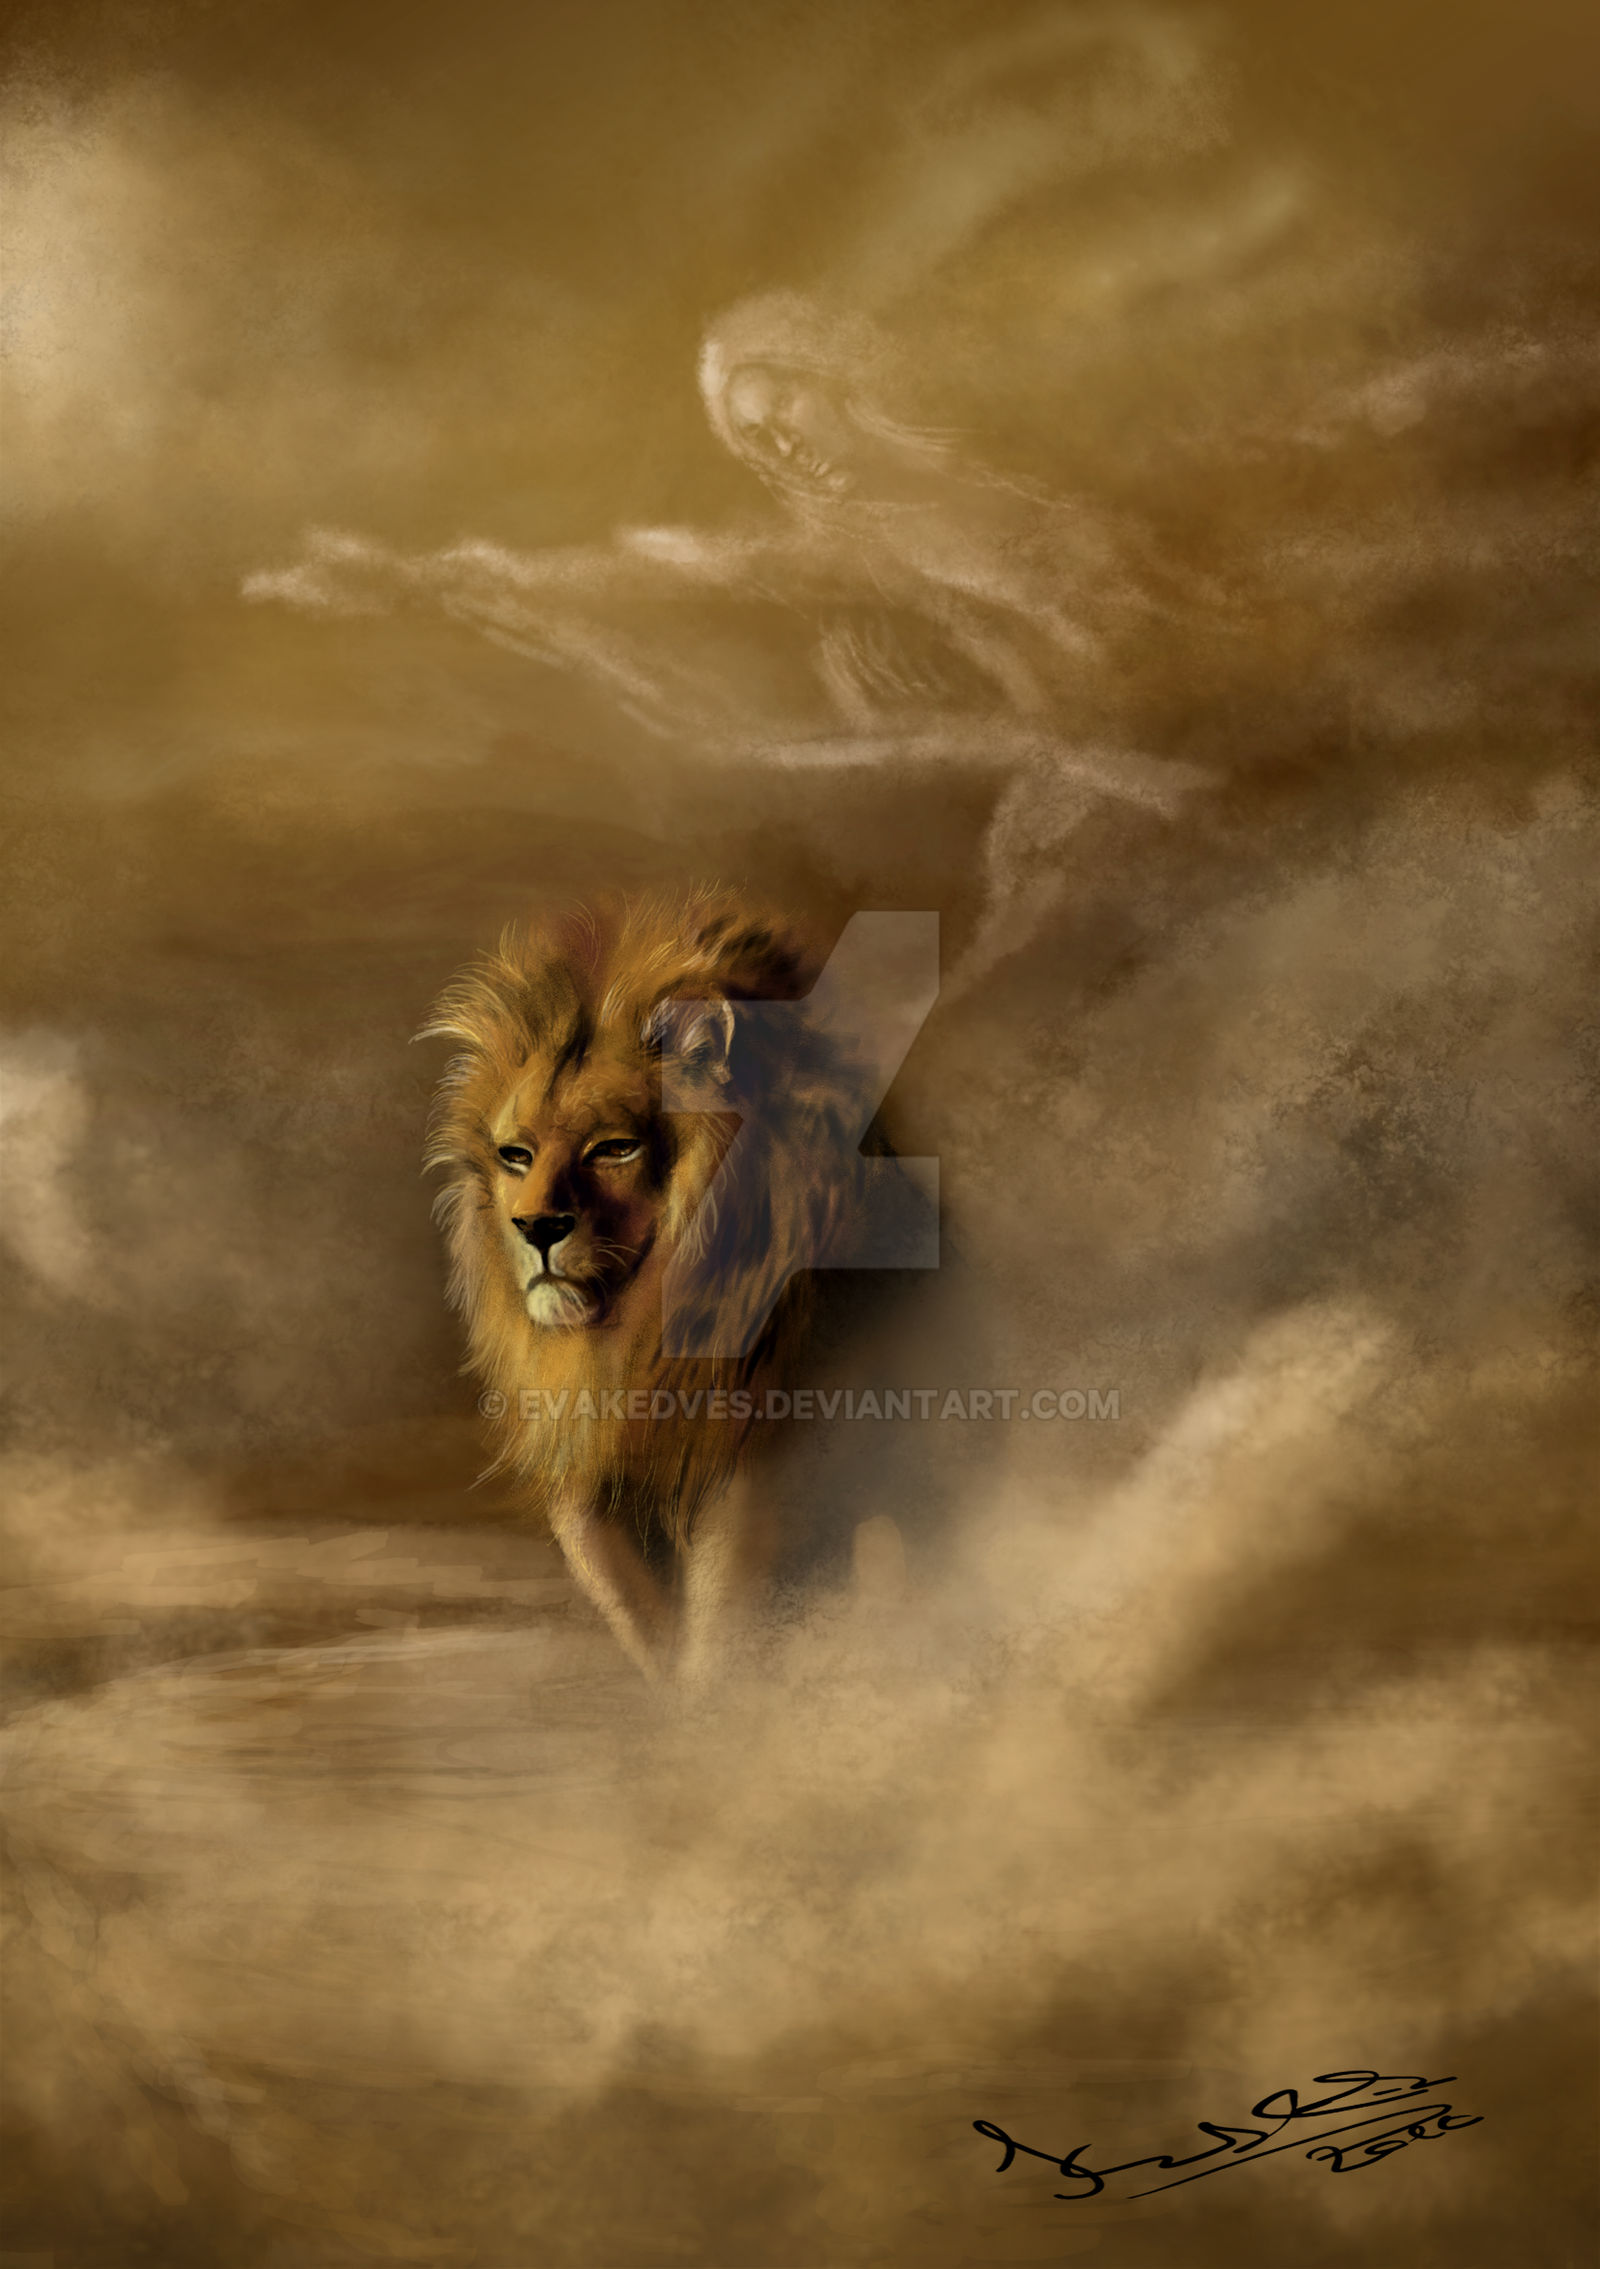 aslan by jovee on DeviantArt